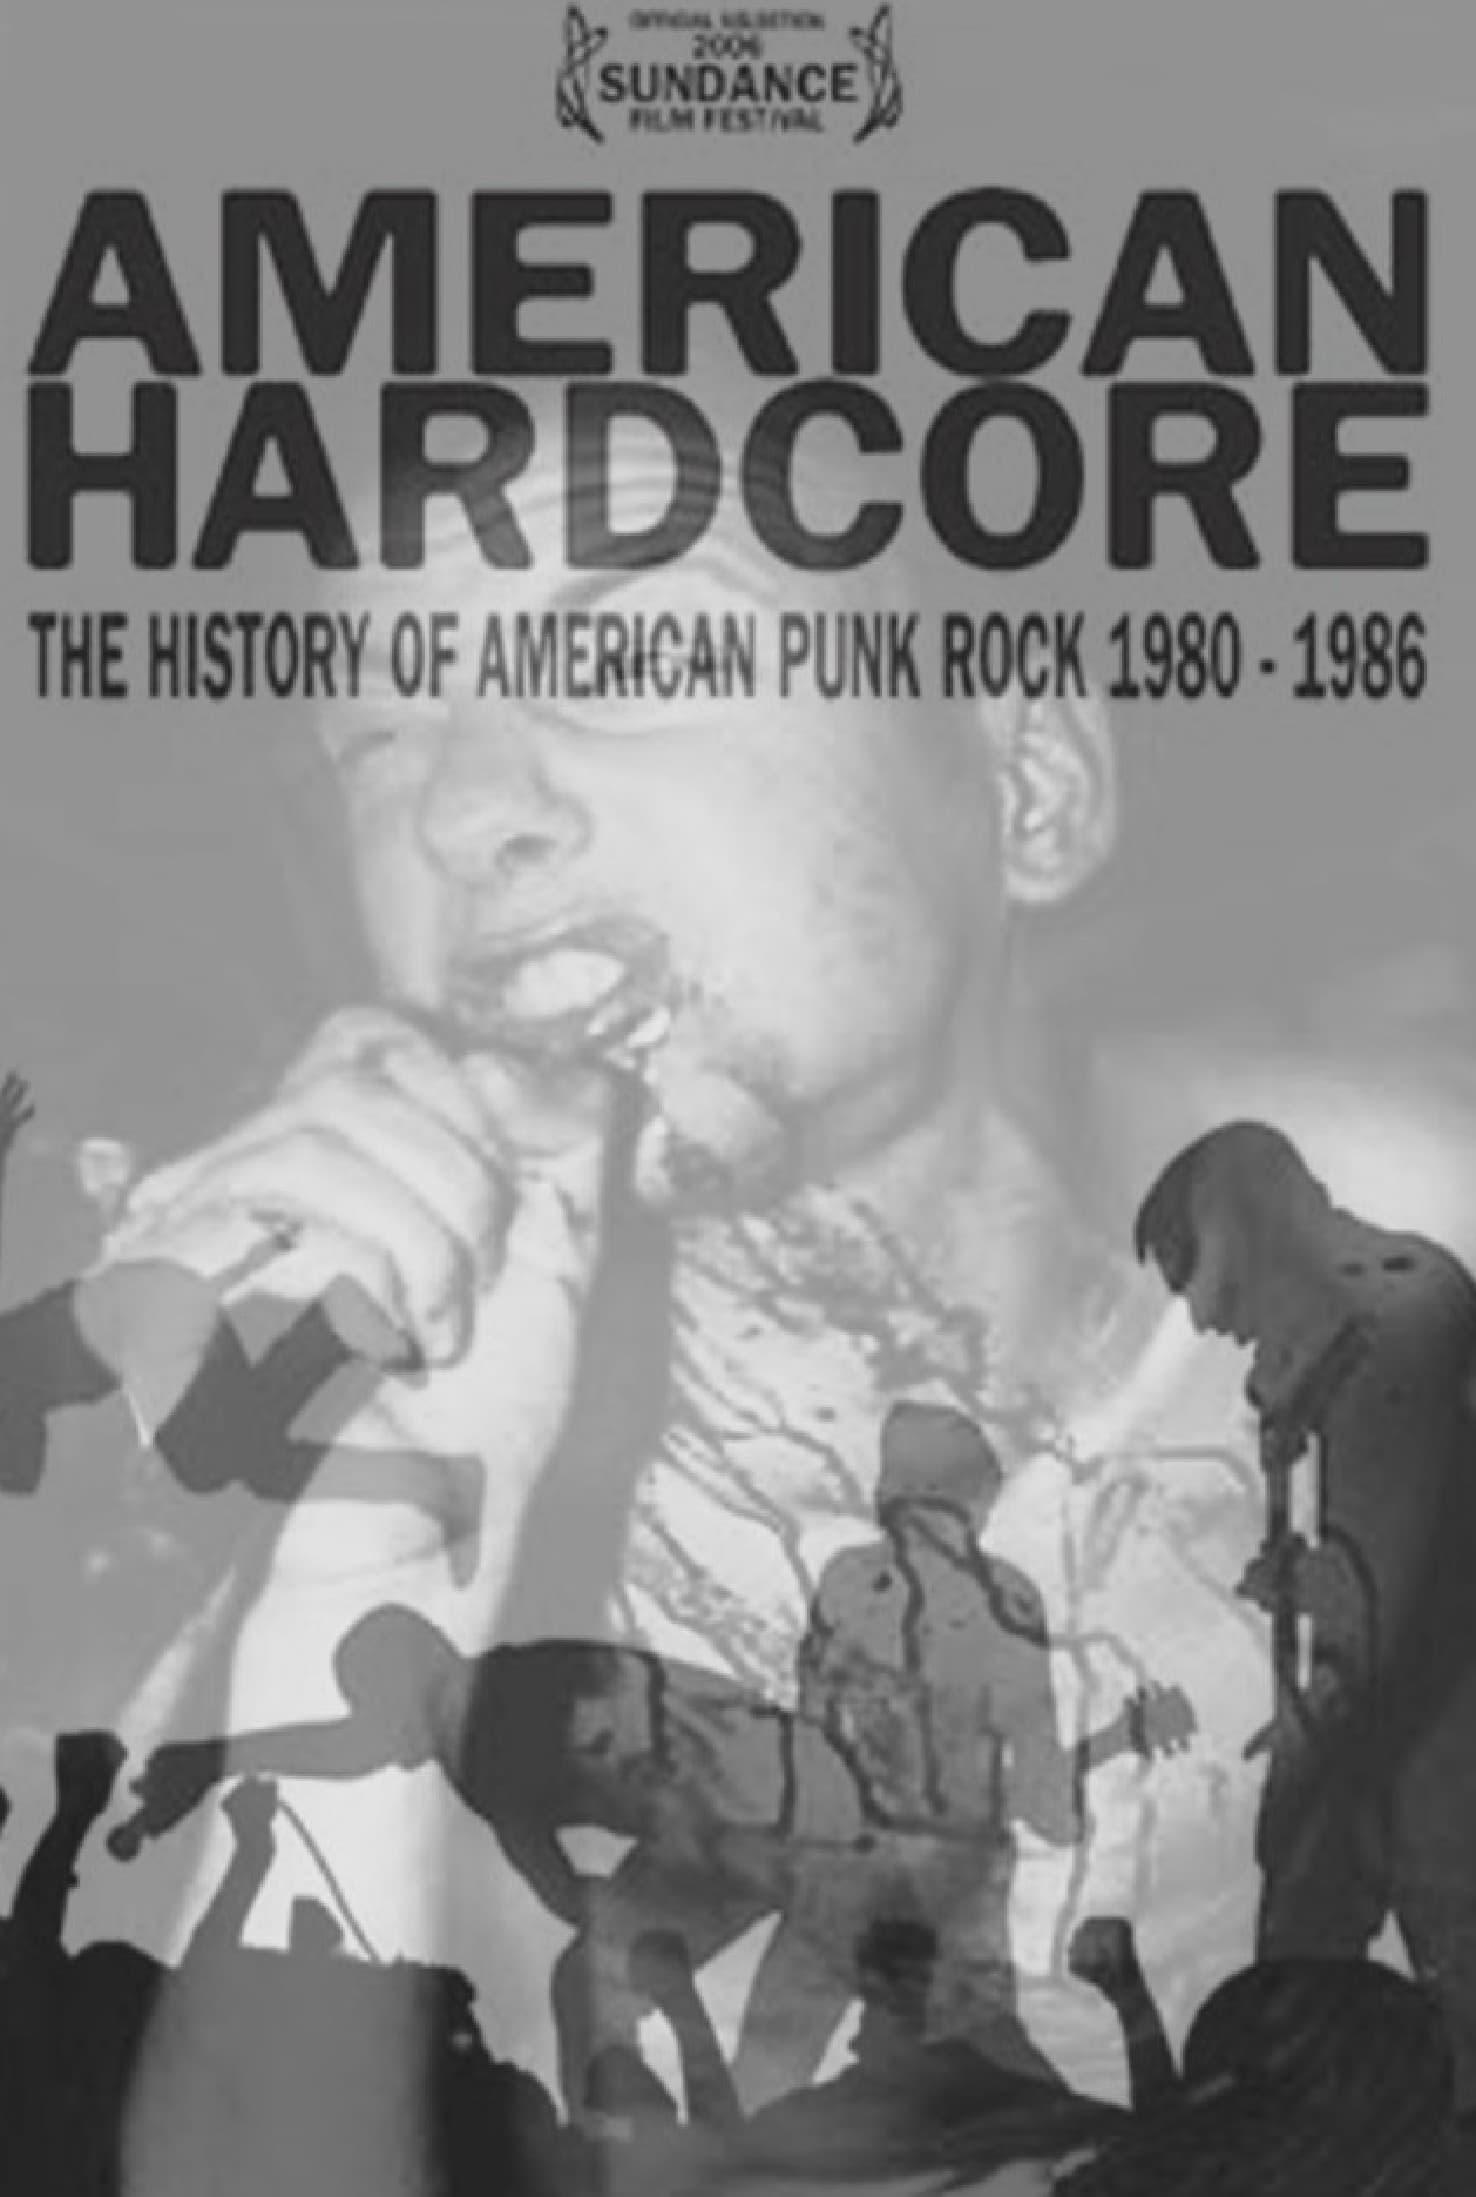 American Hardcore poster